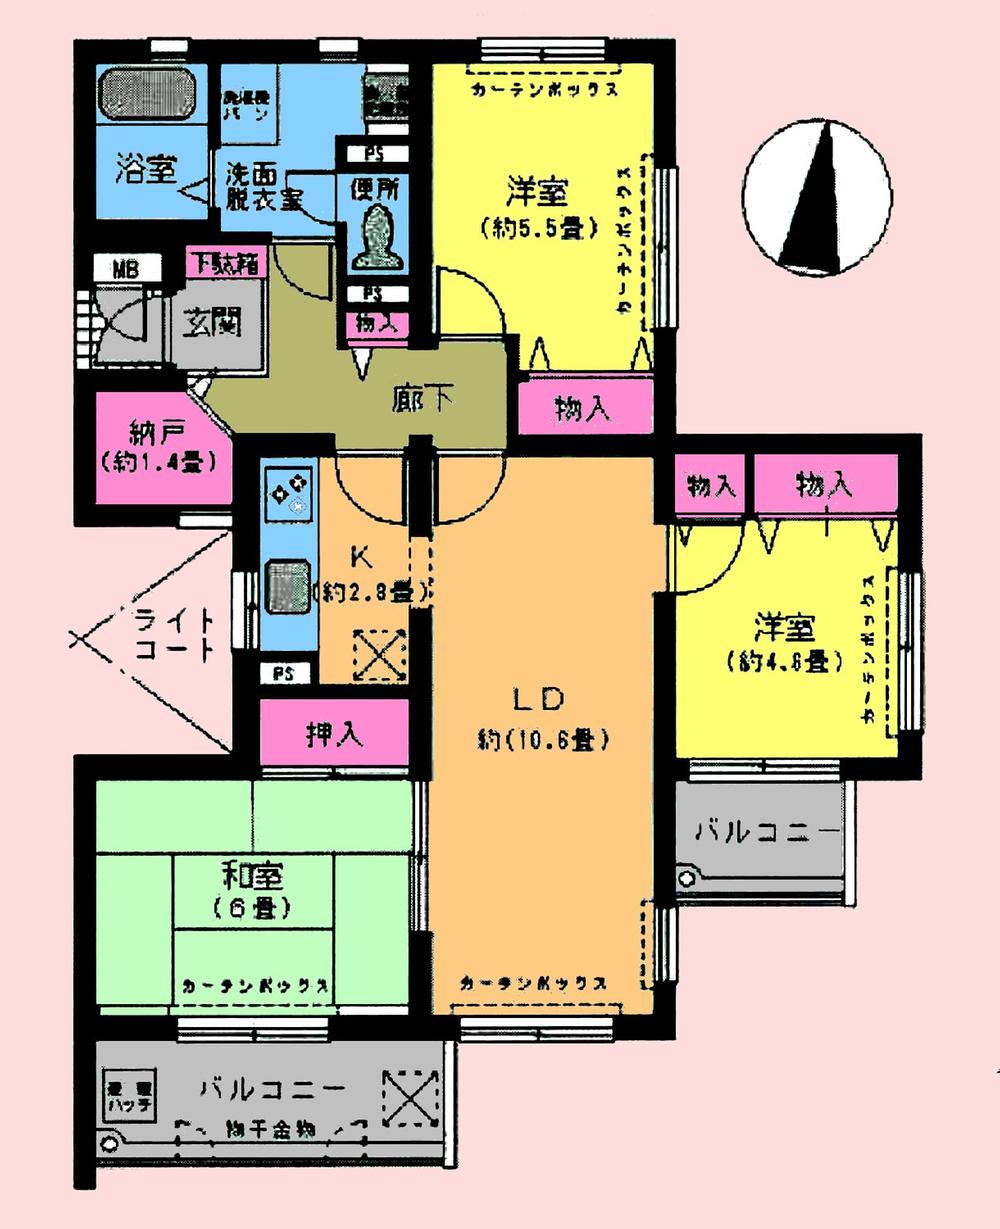 Floor plan. 3LDK + S (storeroom), Price 10.8 million yen, Occupied area 72.89 sq m , Balcony area 8.55 sq m